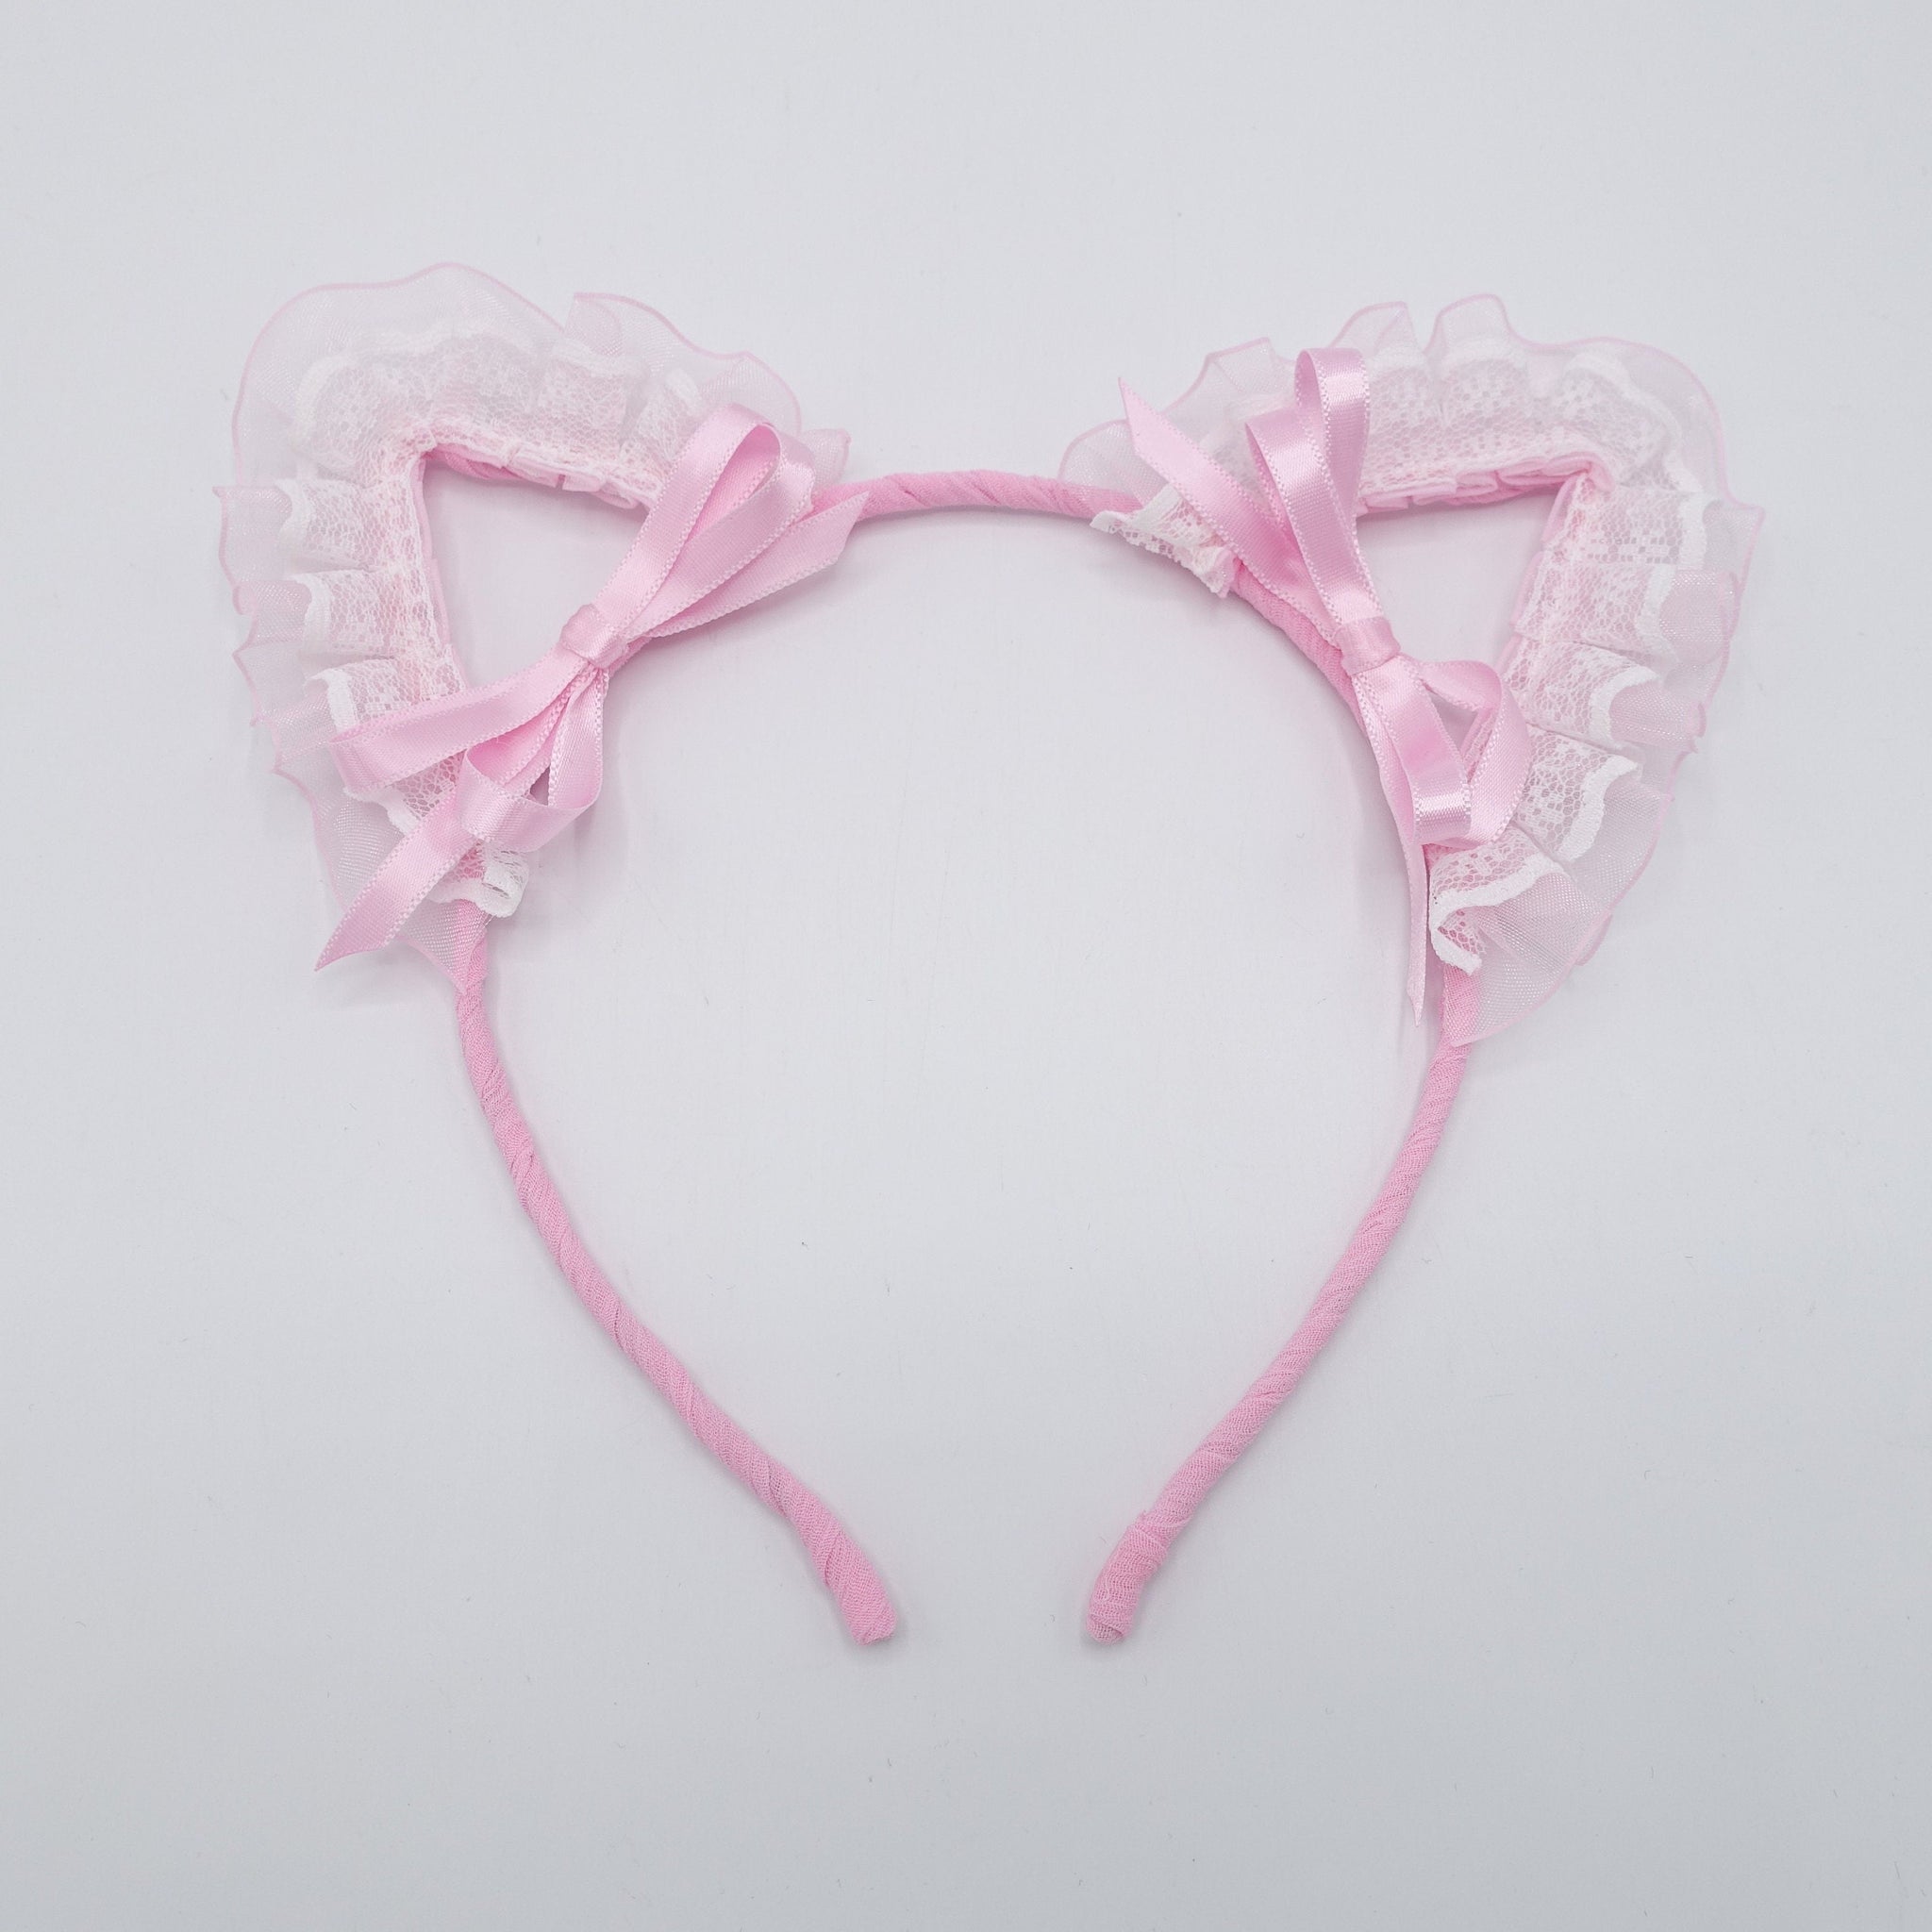 VeryShine Hair Accessories Pink cat ear headband organza lace wrap event headband